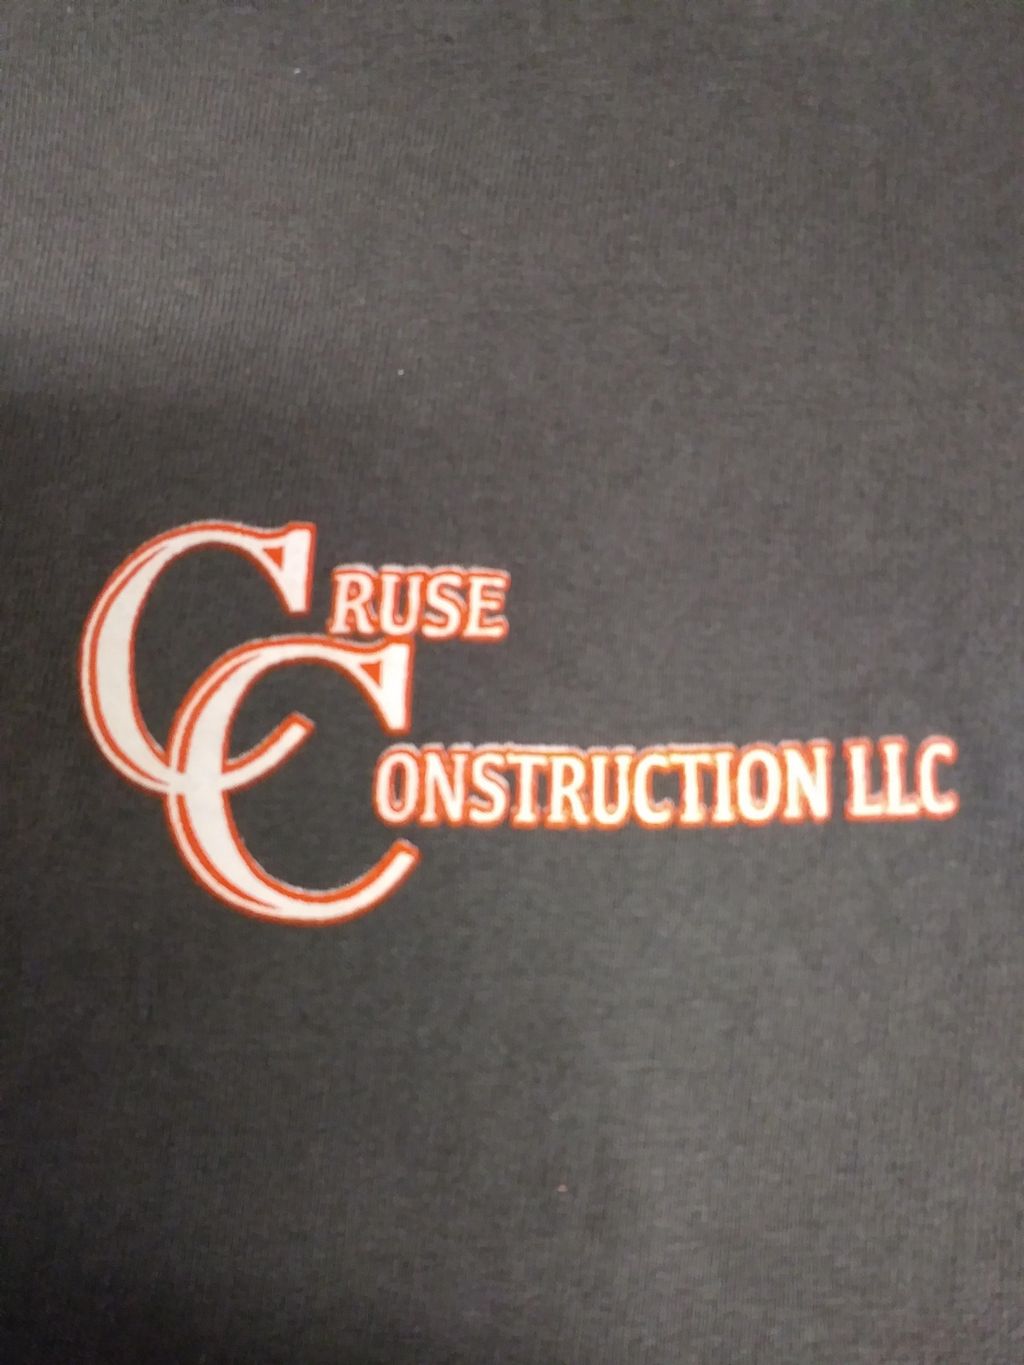 Cruse Construction LLC